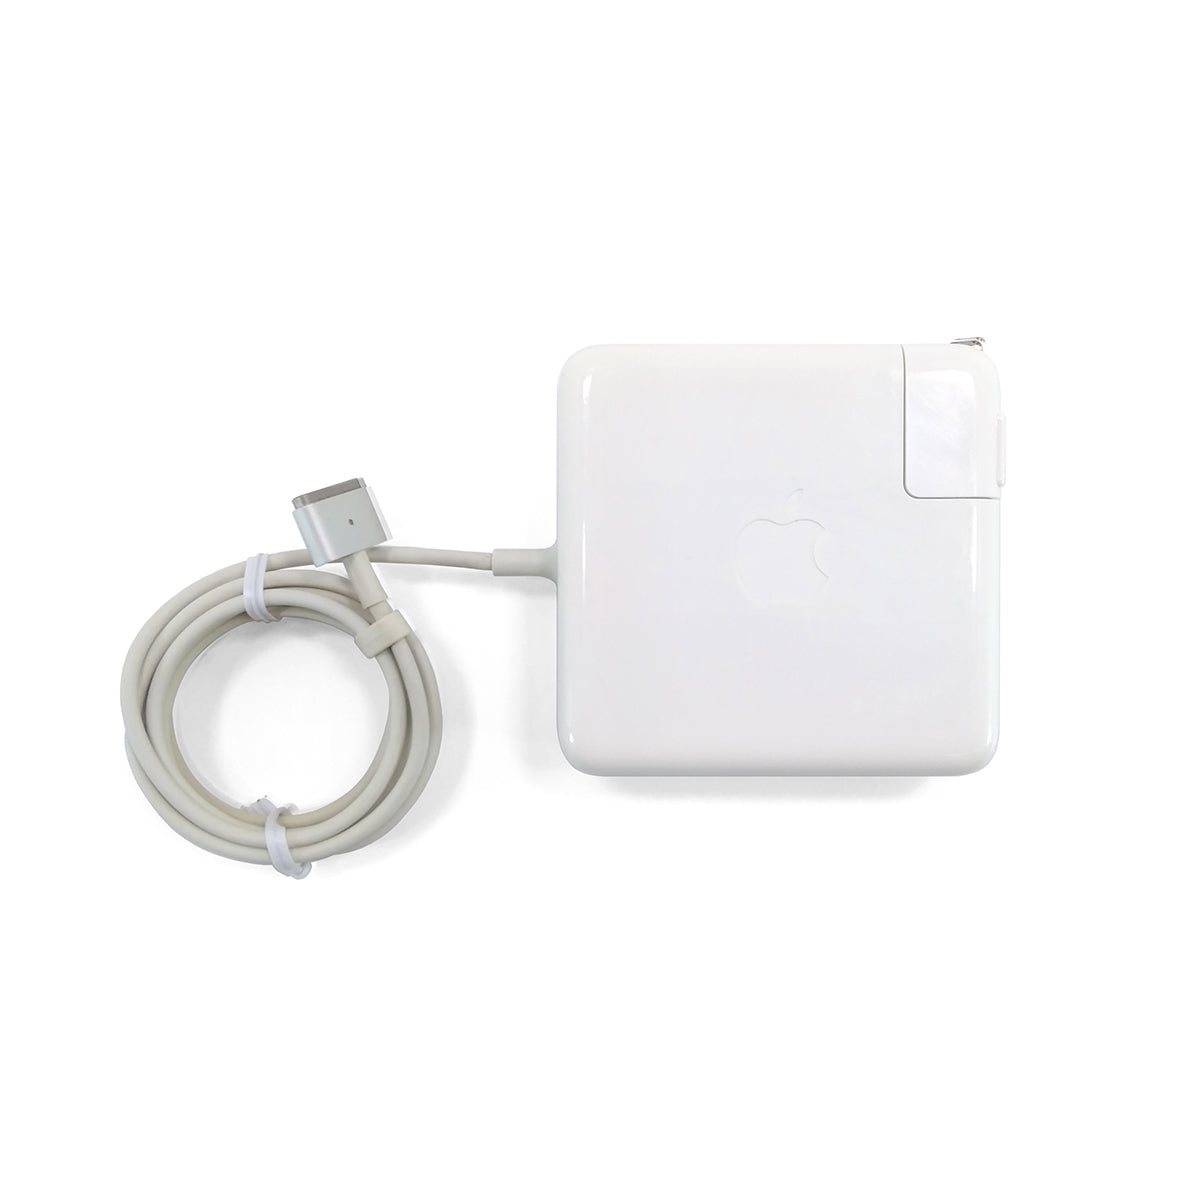 Apple純正アップル 85W MagSafe 2電源アダプタ MD506E/A